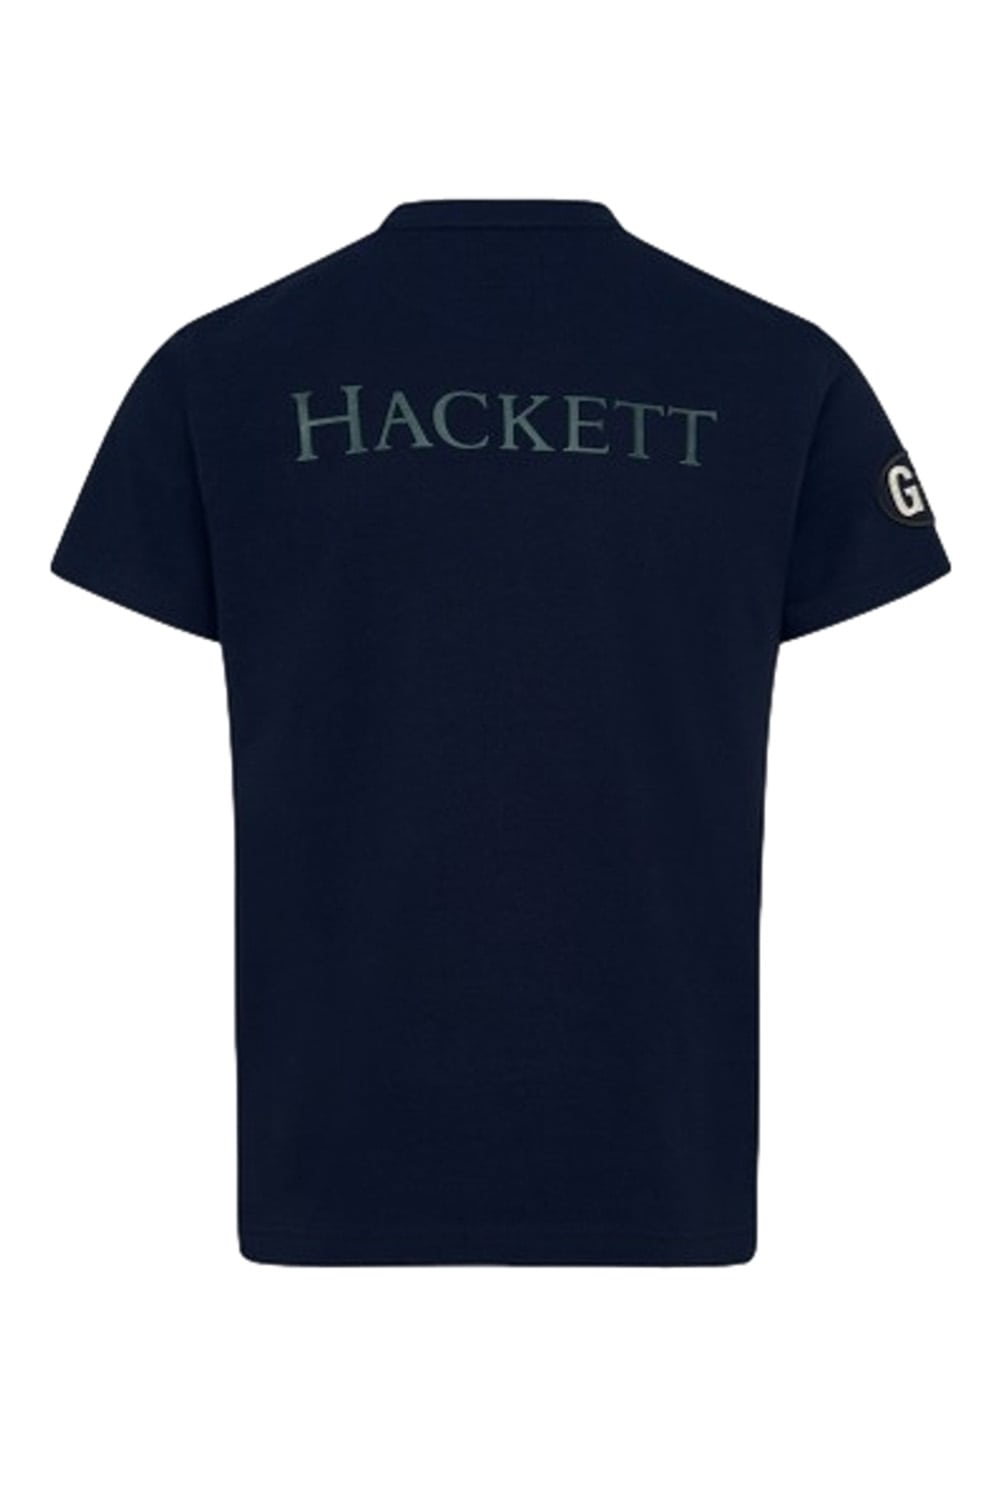 Hackett Mens S/S R-N (England Flag Print) T-Shirt HM500503